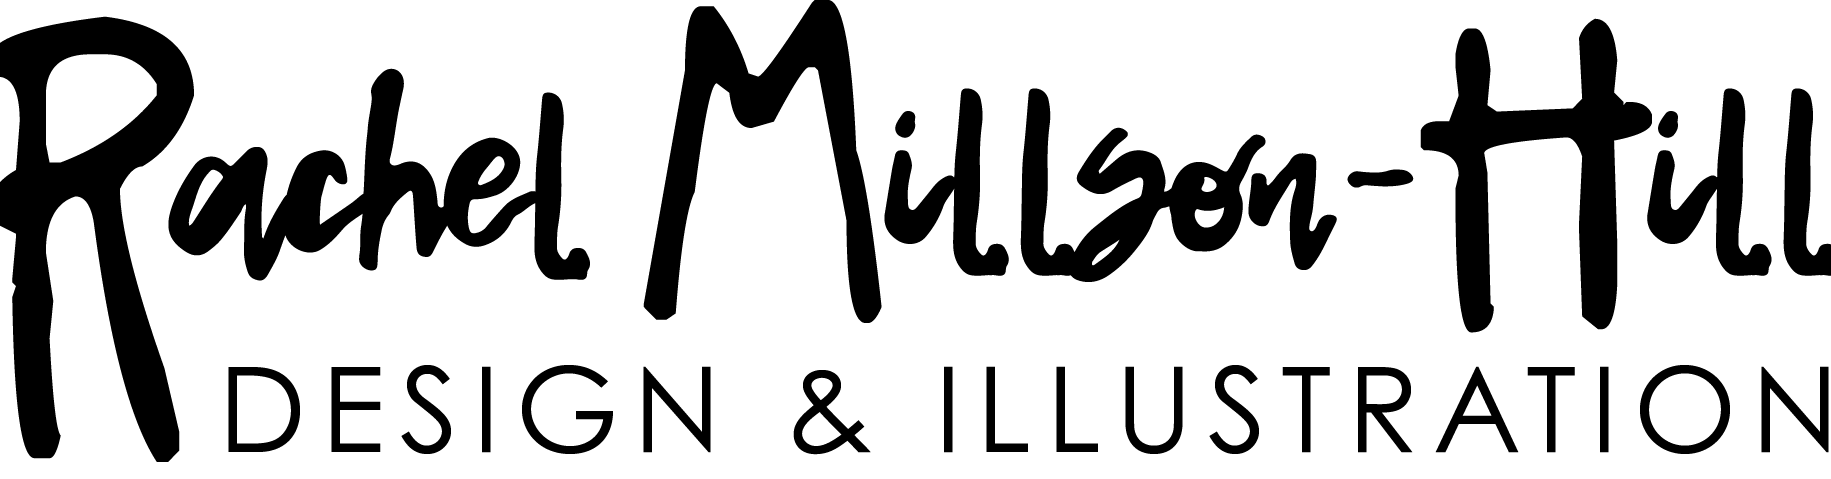 rachel Millson-Hill